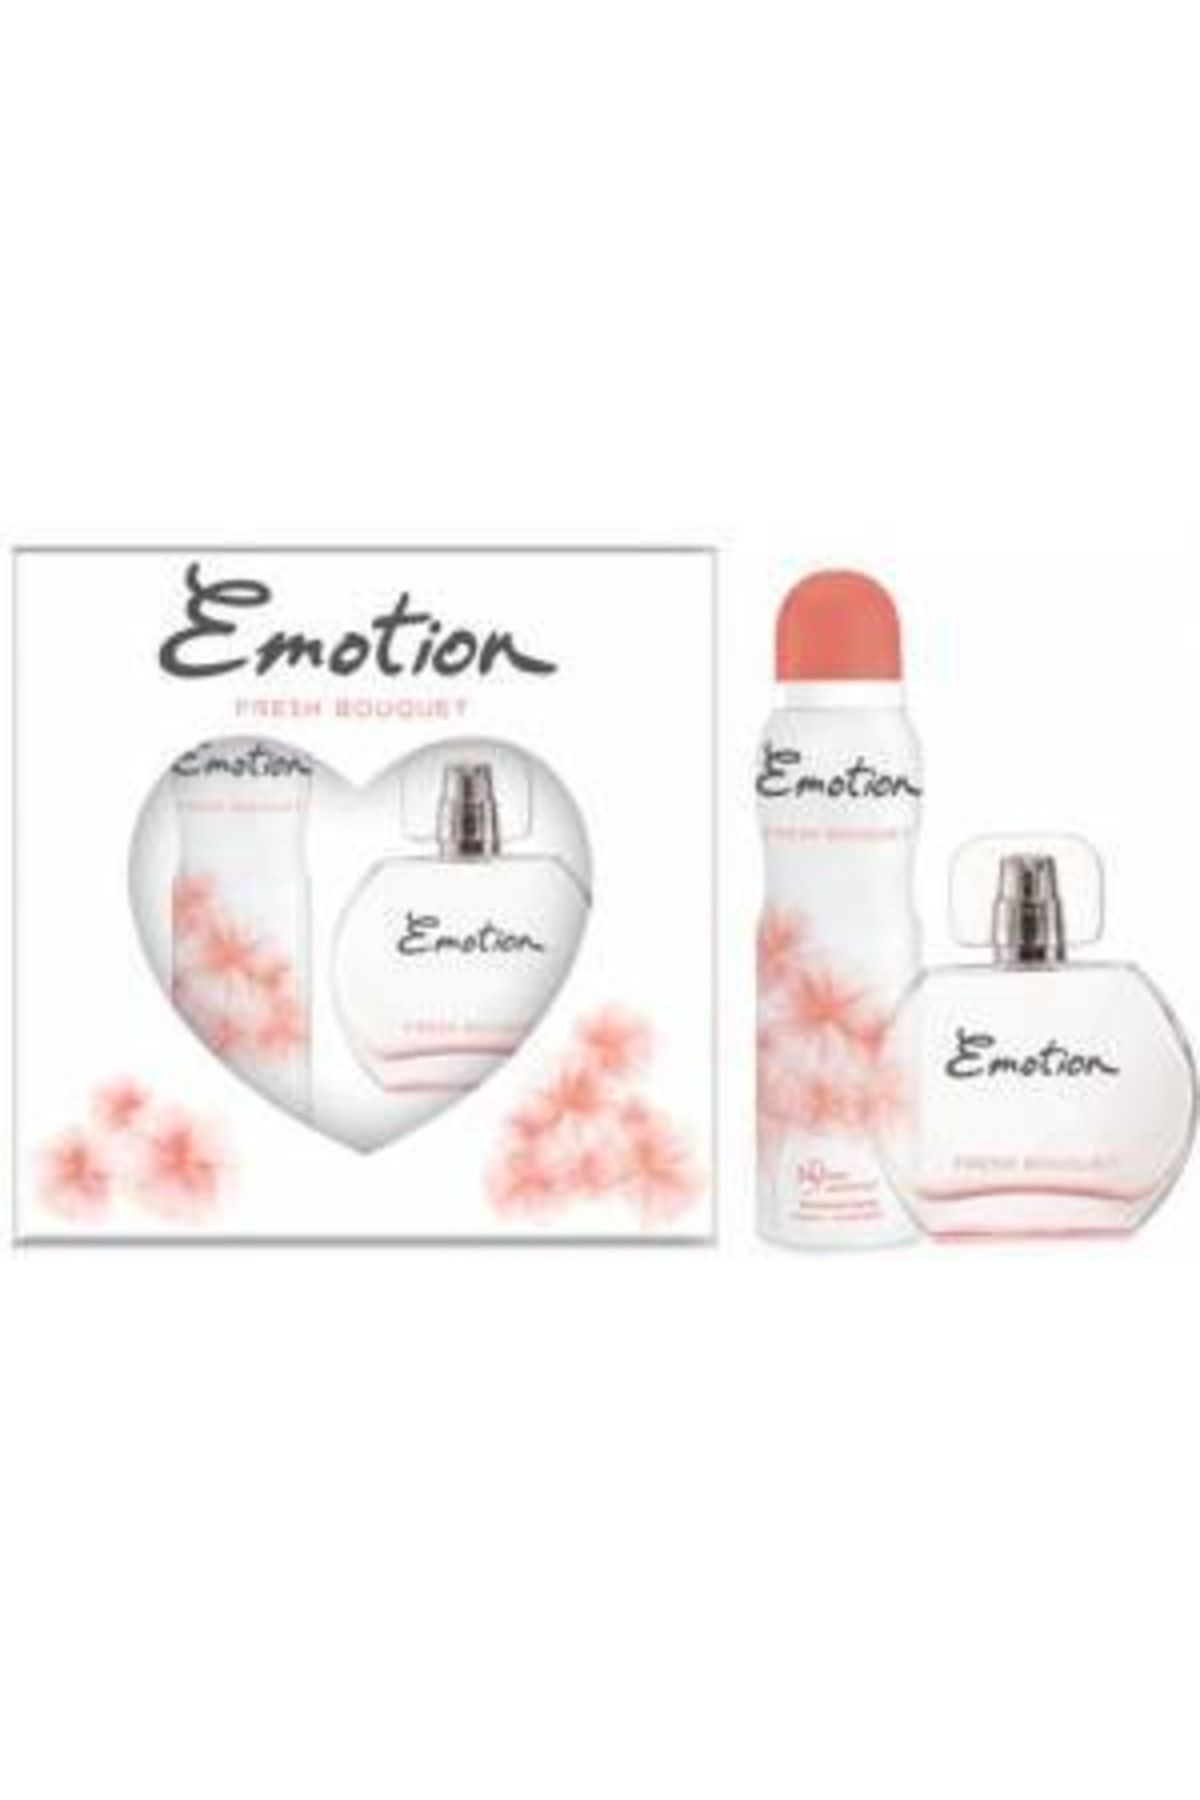 Emotion Fresh Bouqlet Bayan Edt 50 ml + 150 ml Deodorant Parfüm Seti